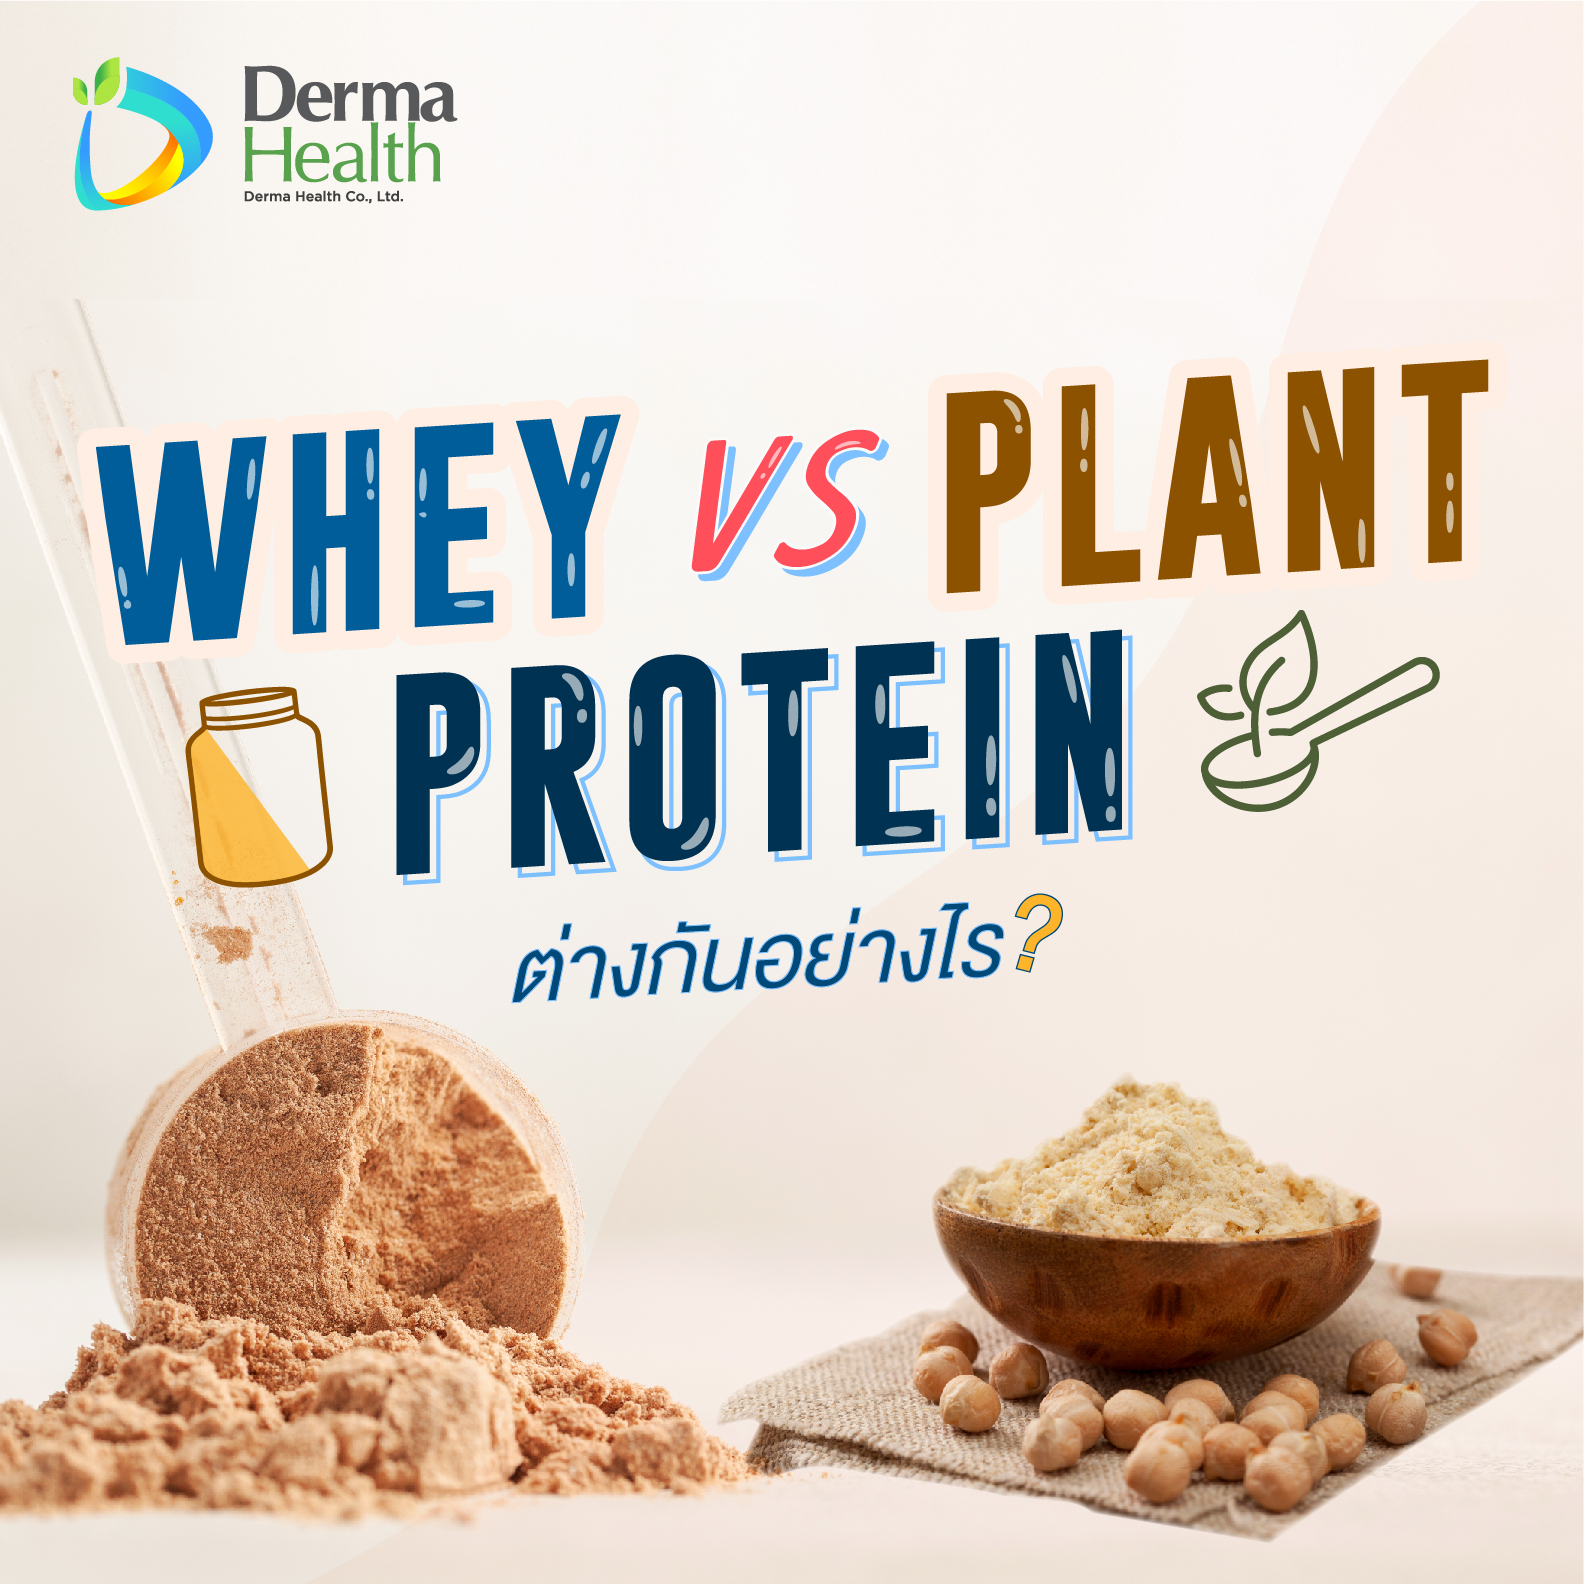 Whey VS Plant Protein ต่างกันอย่างไร?